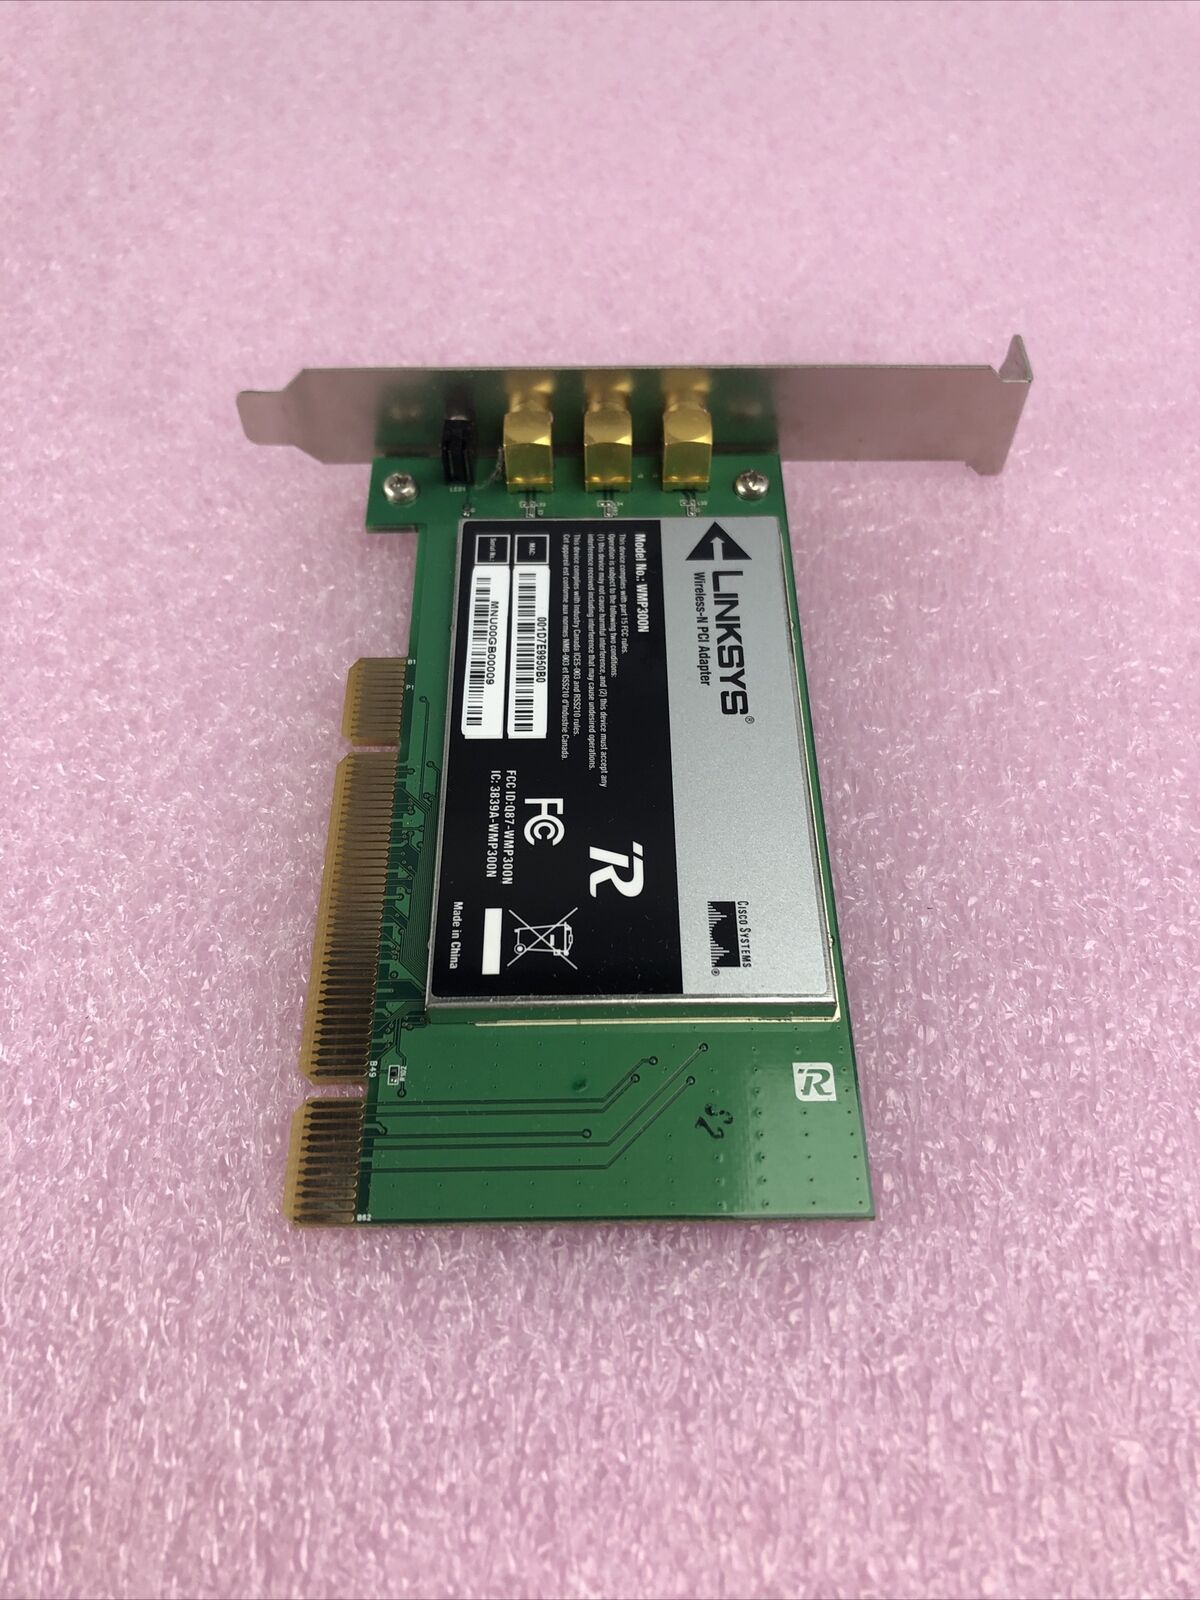 Linksys WMP300N Wireless-N PCI Adapter